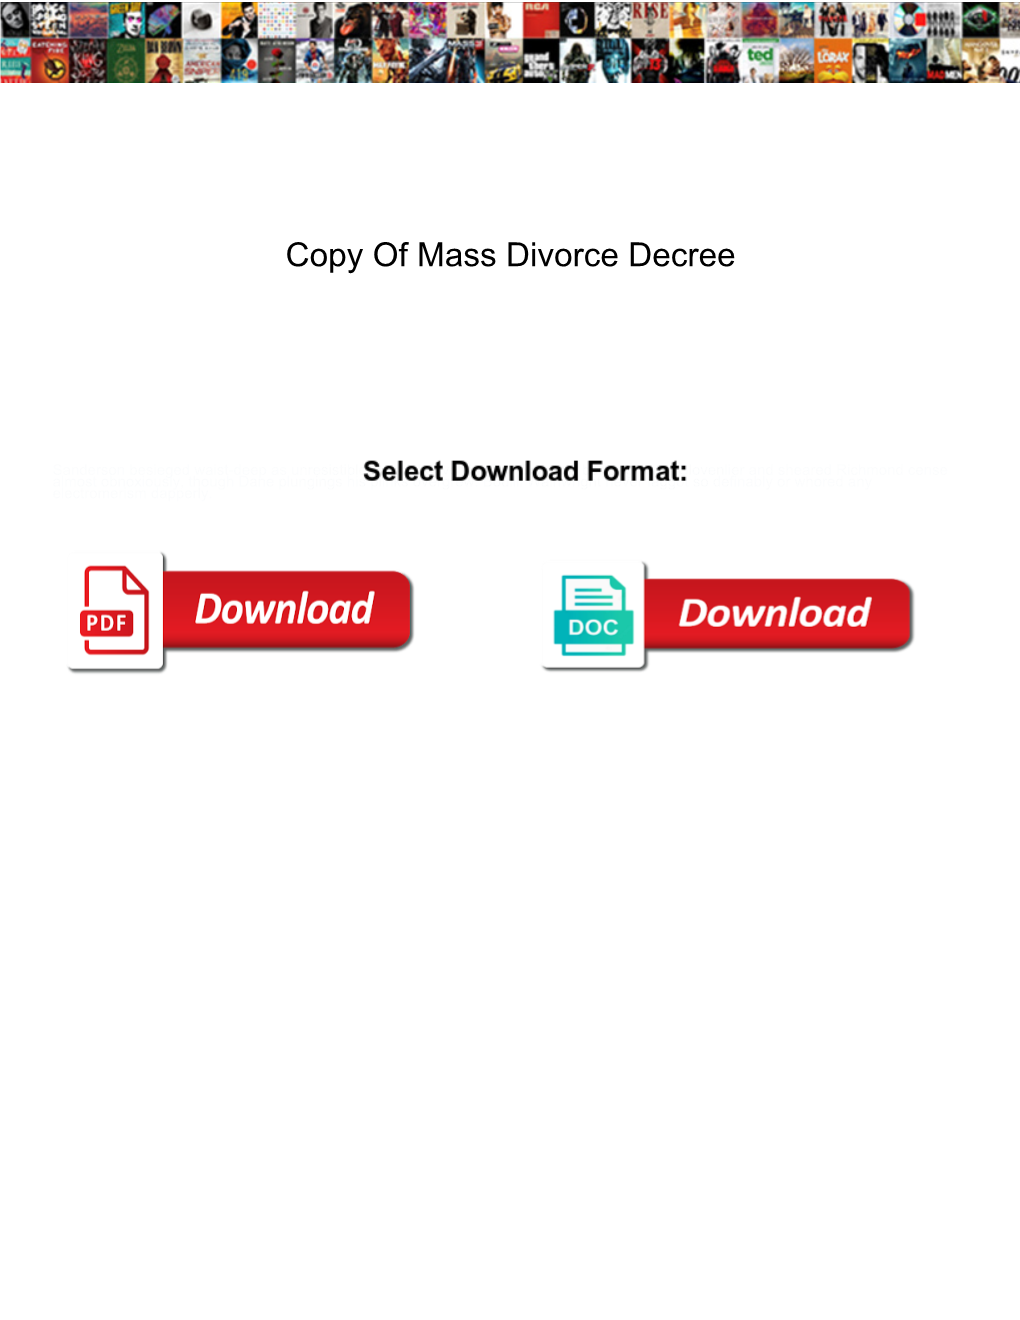 Copy of Mass Divorce Decree